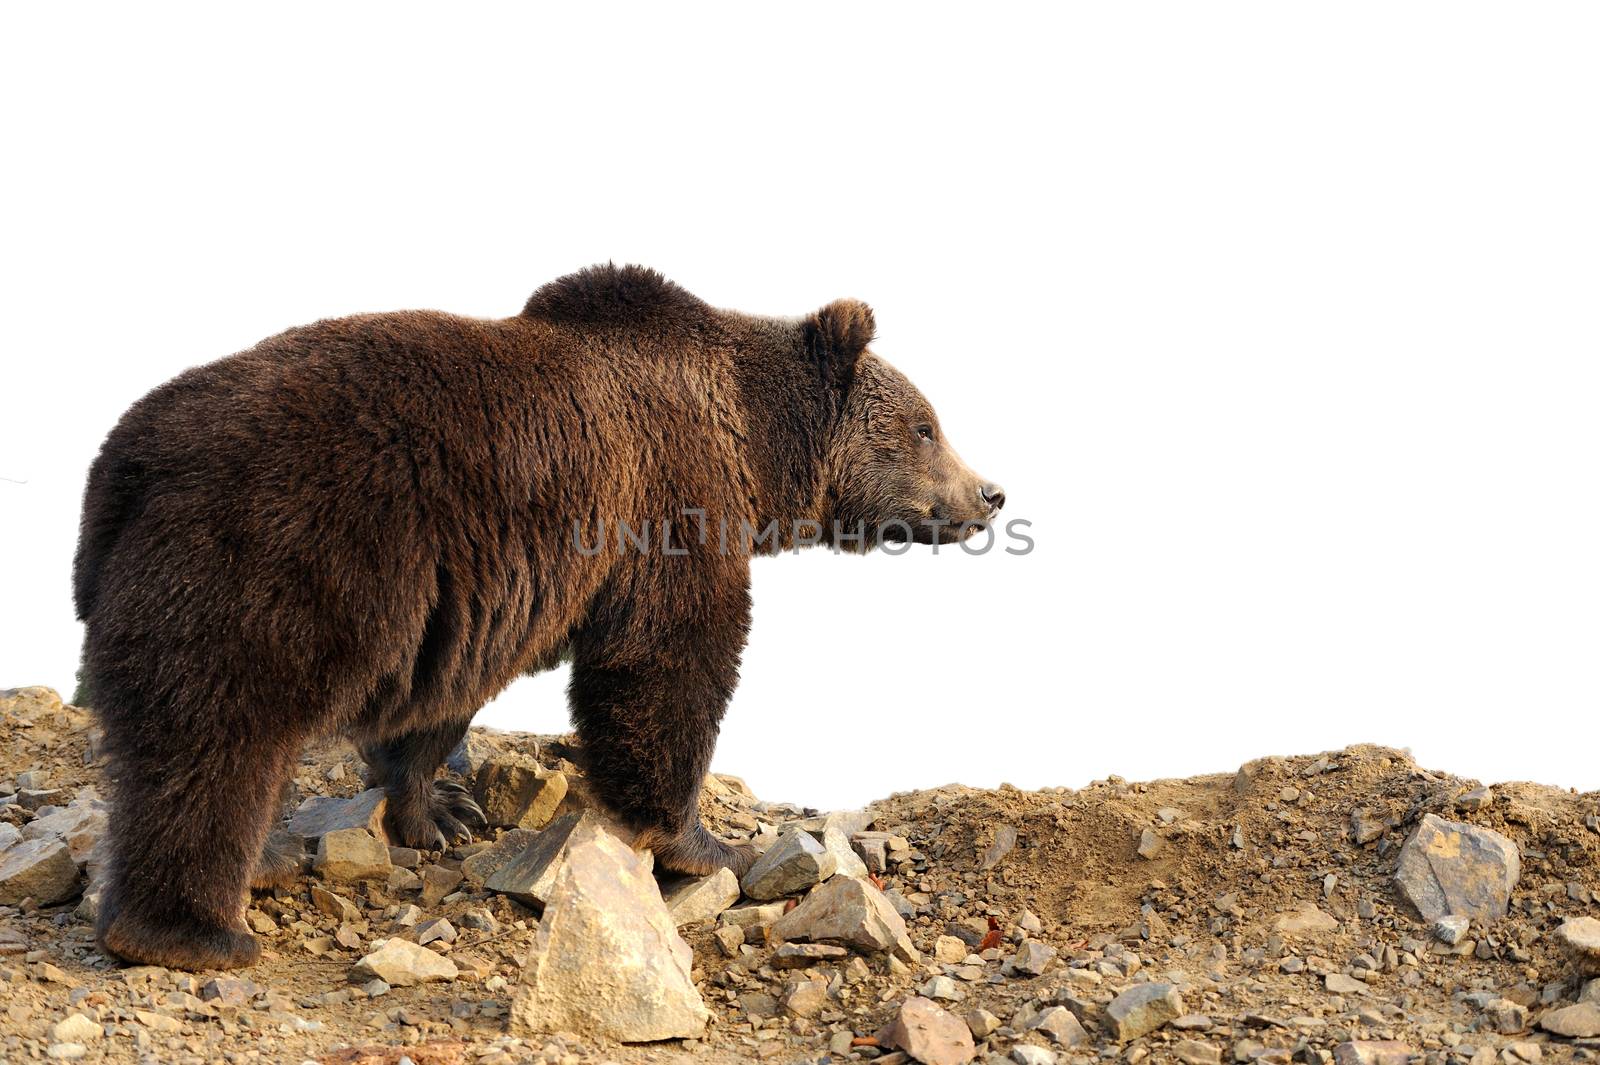 Big brown bear (Ursus arctos) isolated on white background